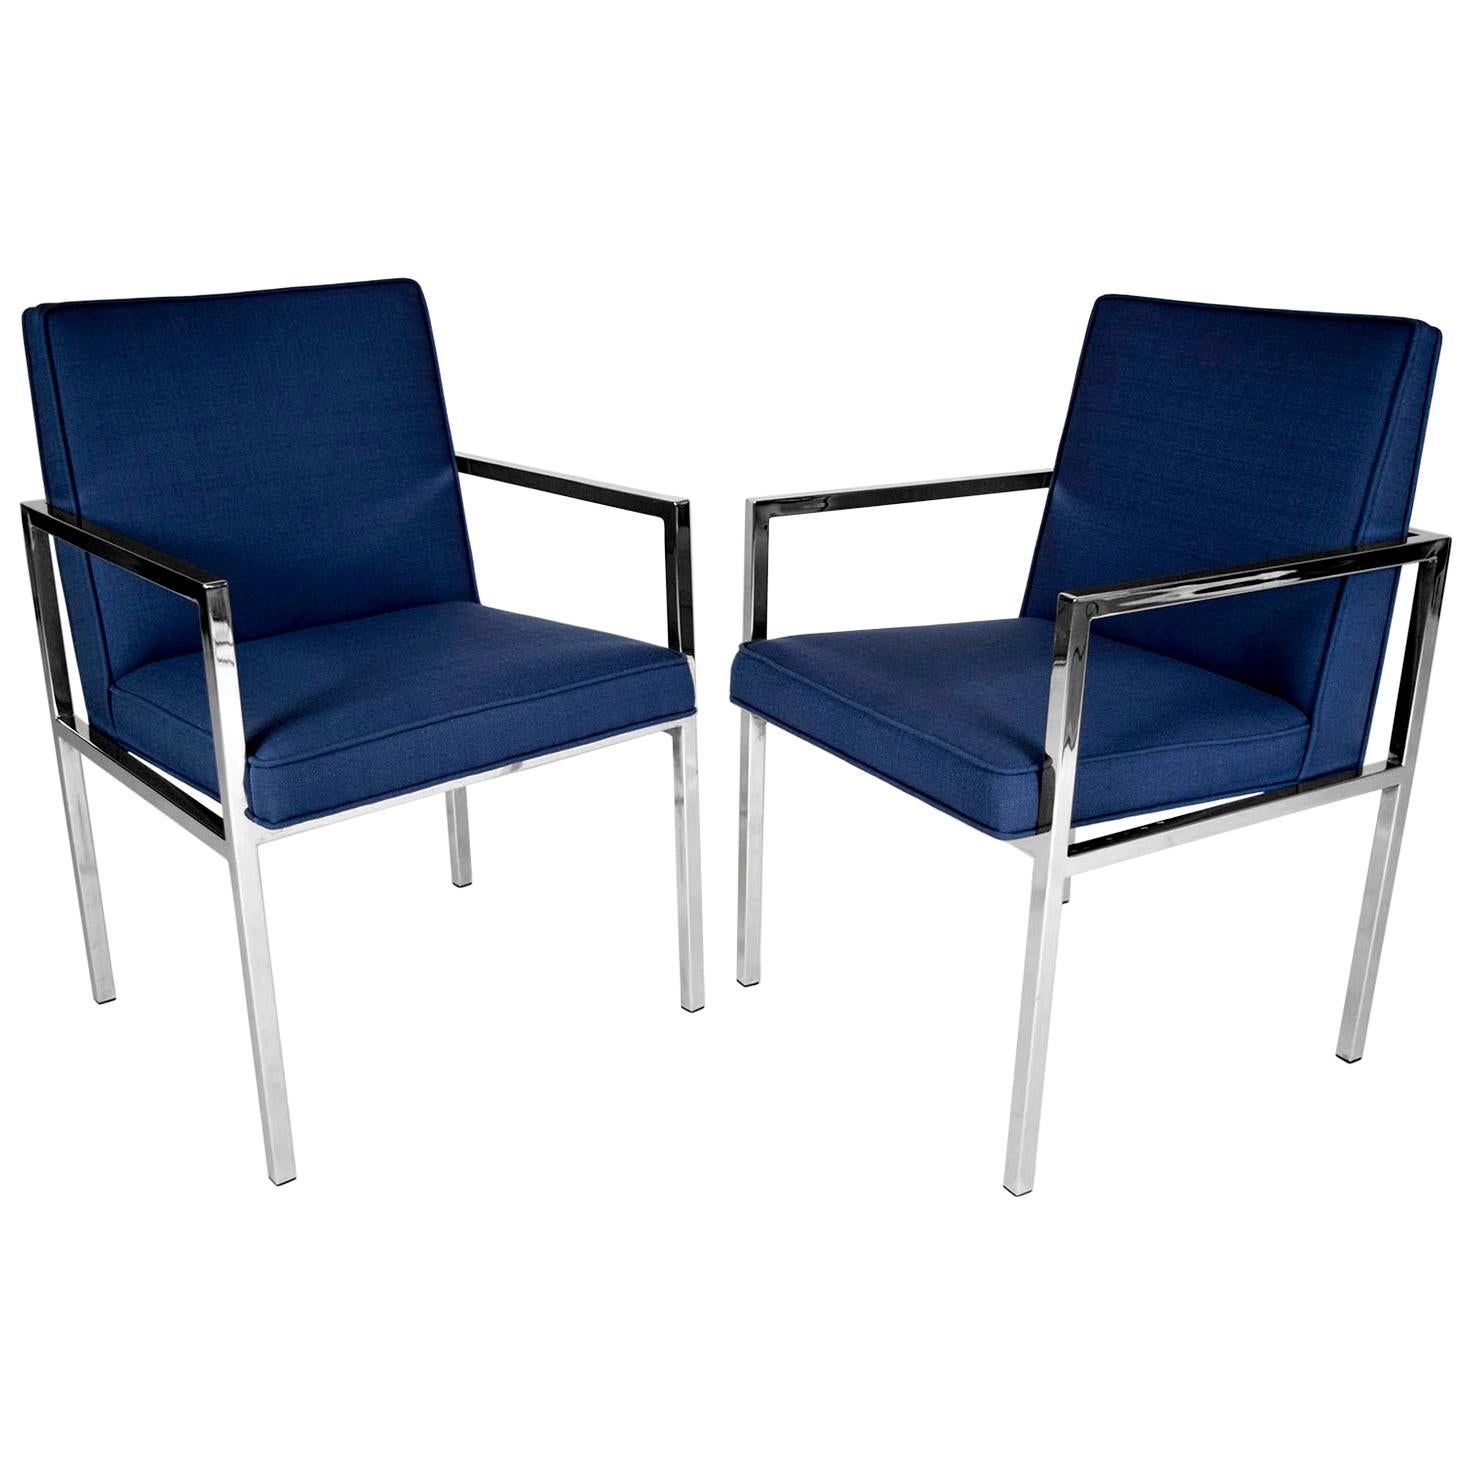 Pair of Mid-Century Modern Milo Baughman Style Lounge Chairs